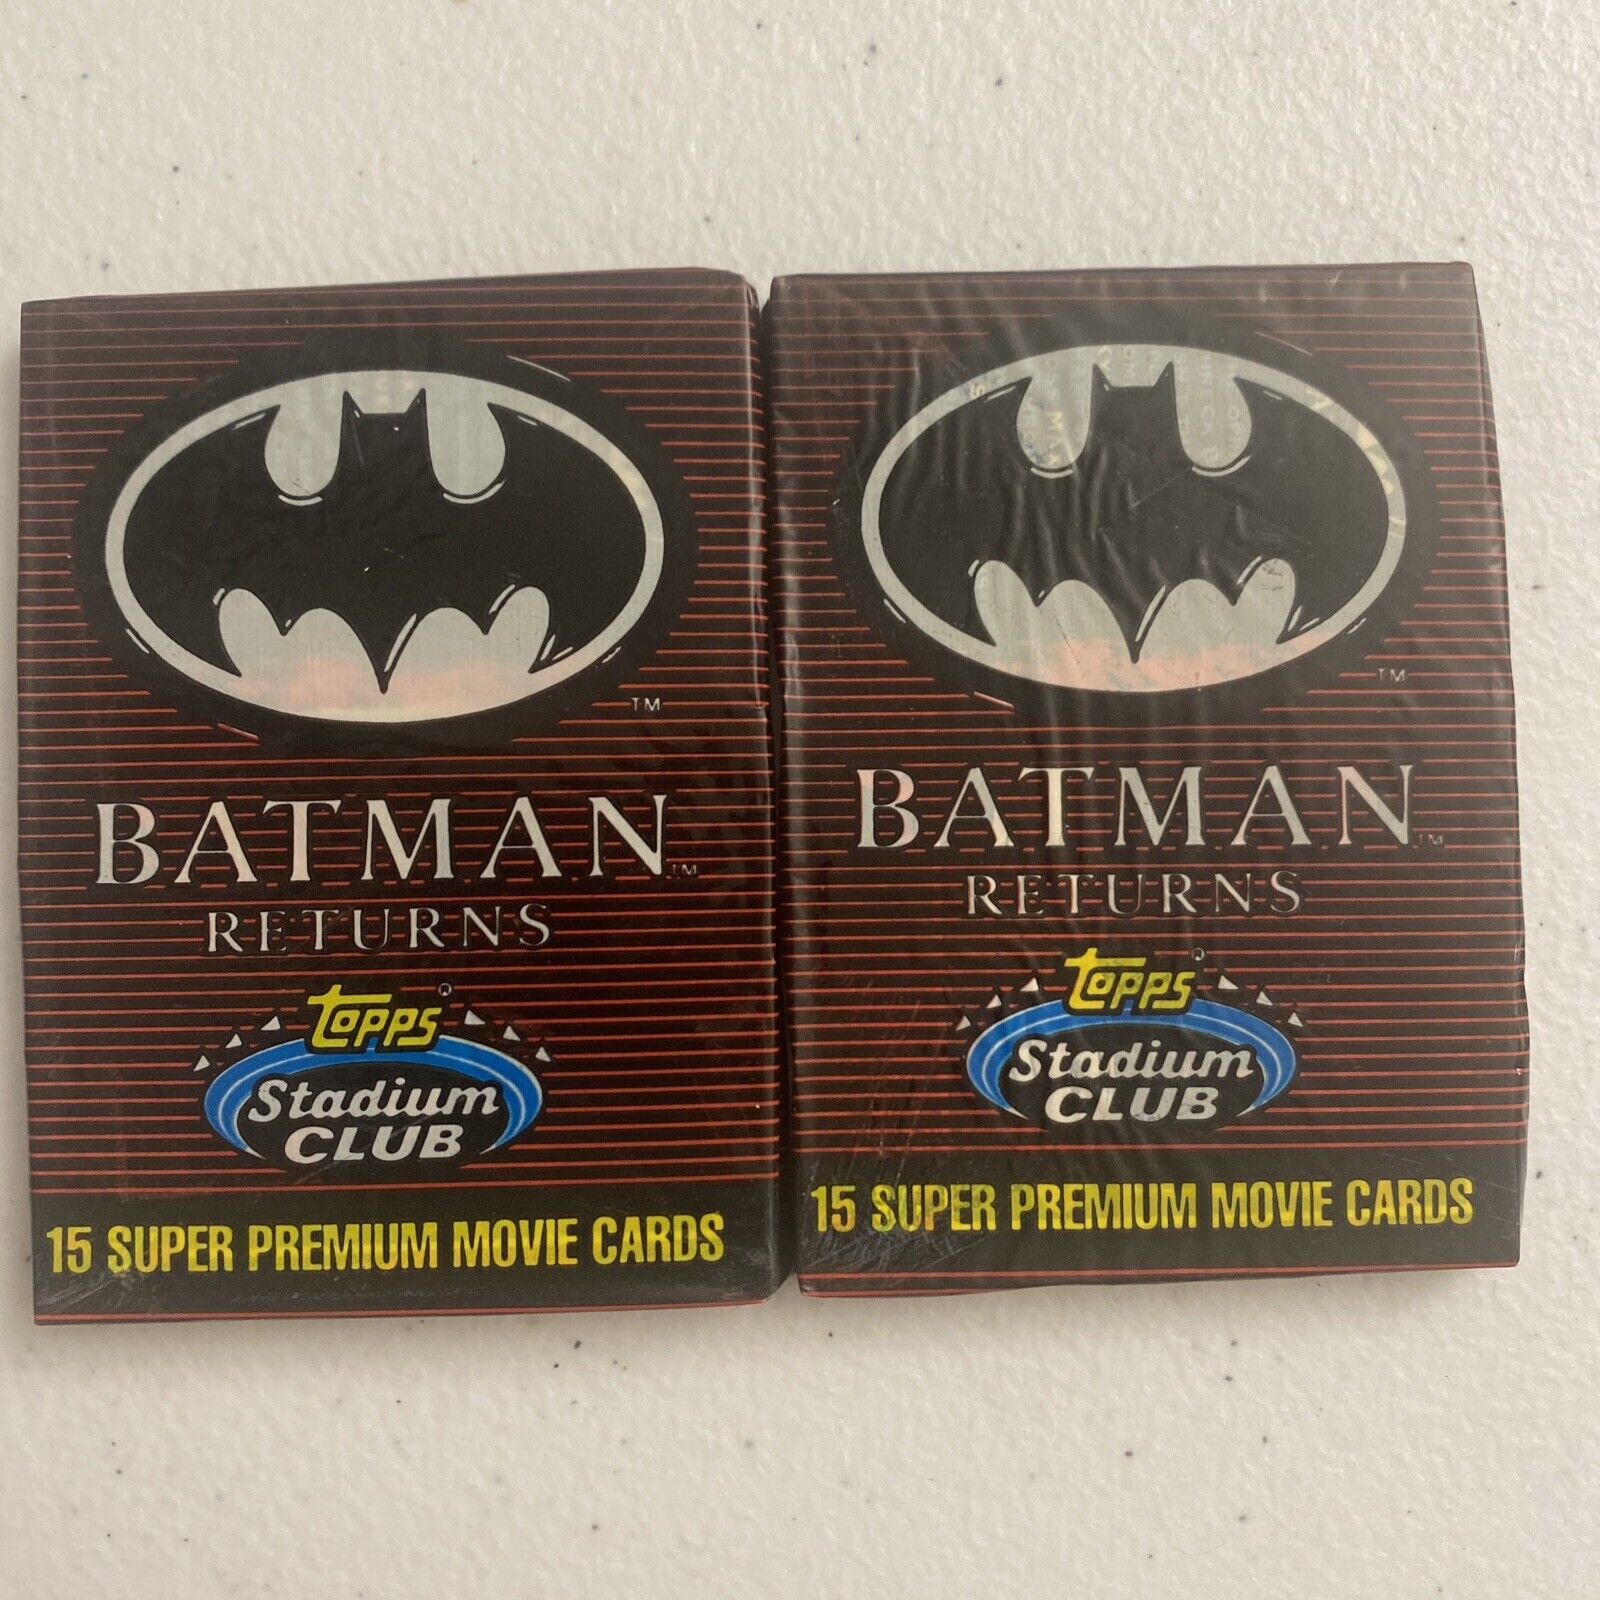 1991 Batman Returns Trading Cards Topps Stadium Club Lot of 2 Packs Unopened